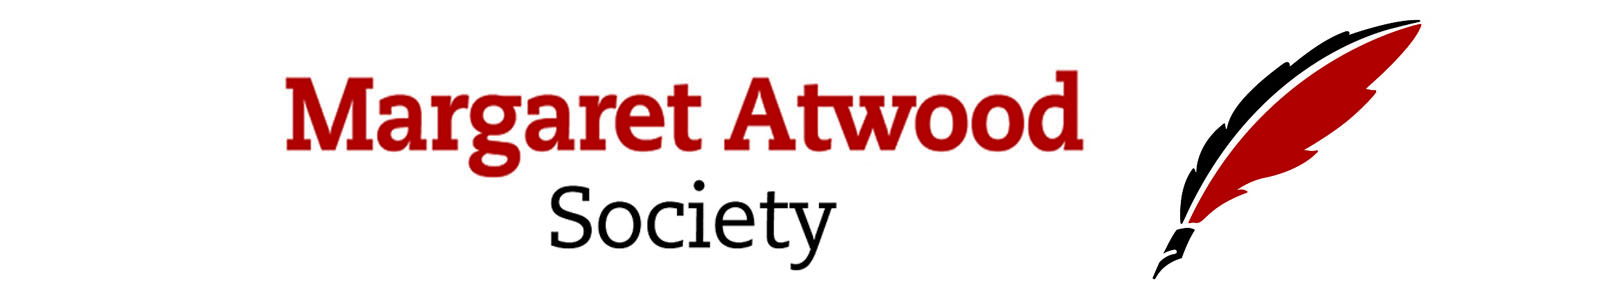 Margaret Atwood Society